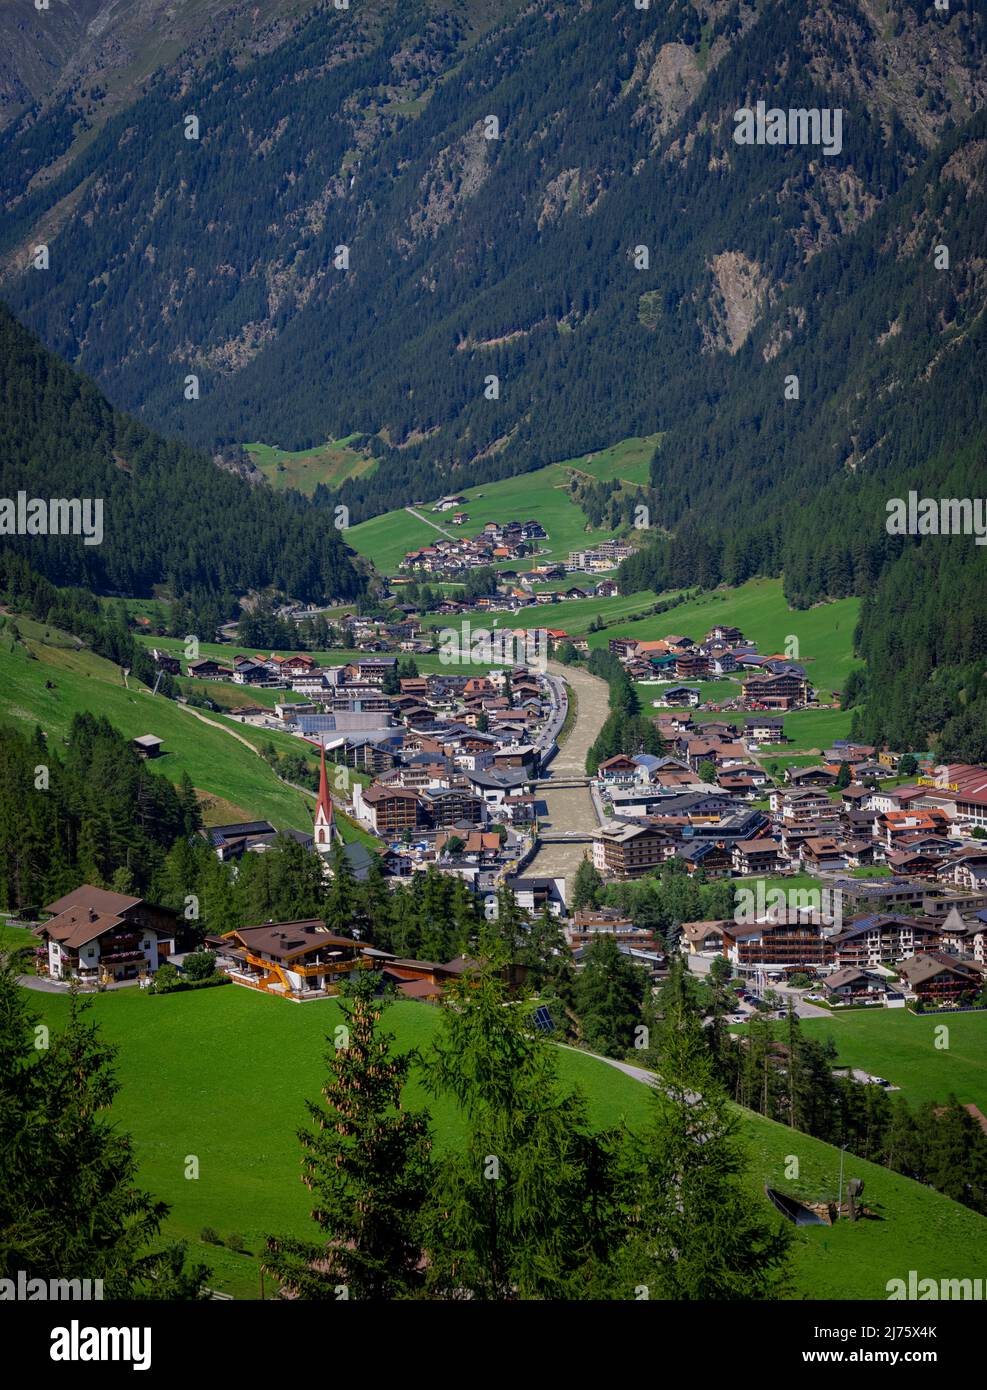 Aerial view over the village of Soelden in Austria, Stock Photo